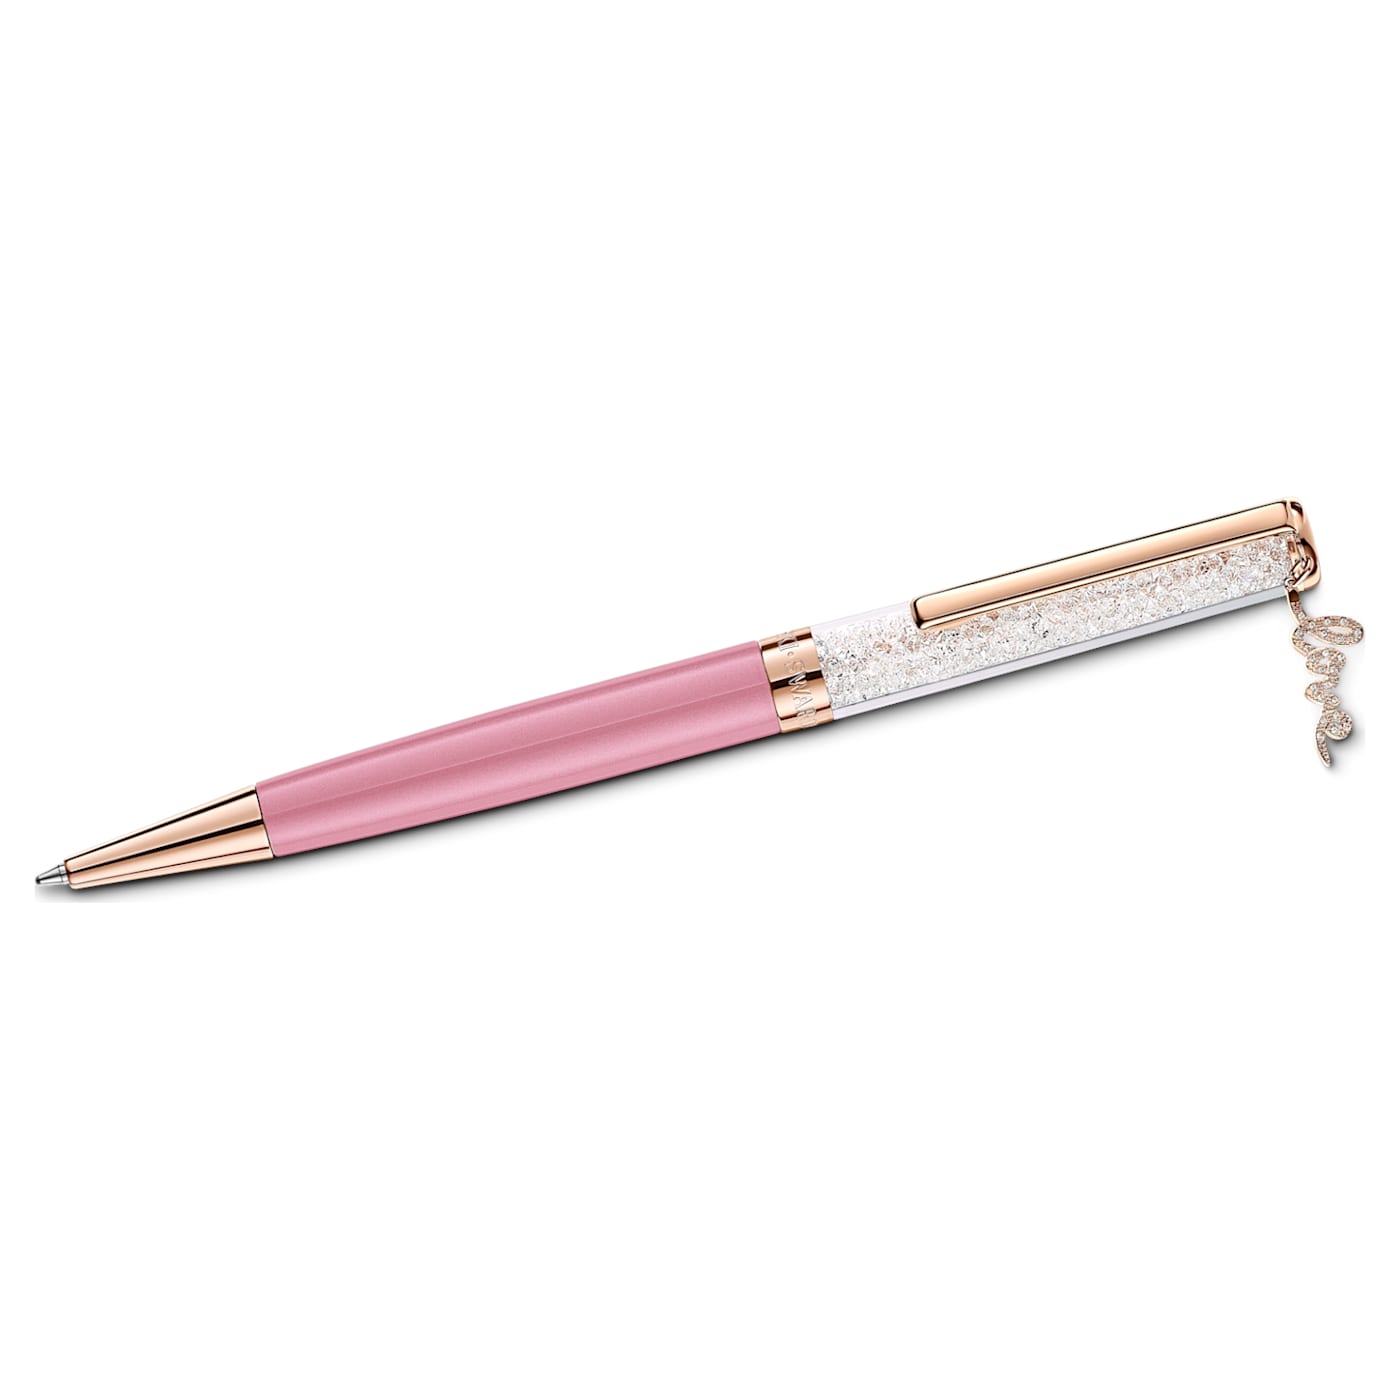 SWAROVSKI - Crystal Shimmer Ballpoint Pen Pink, Rose-gold tone plated